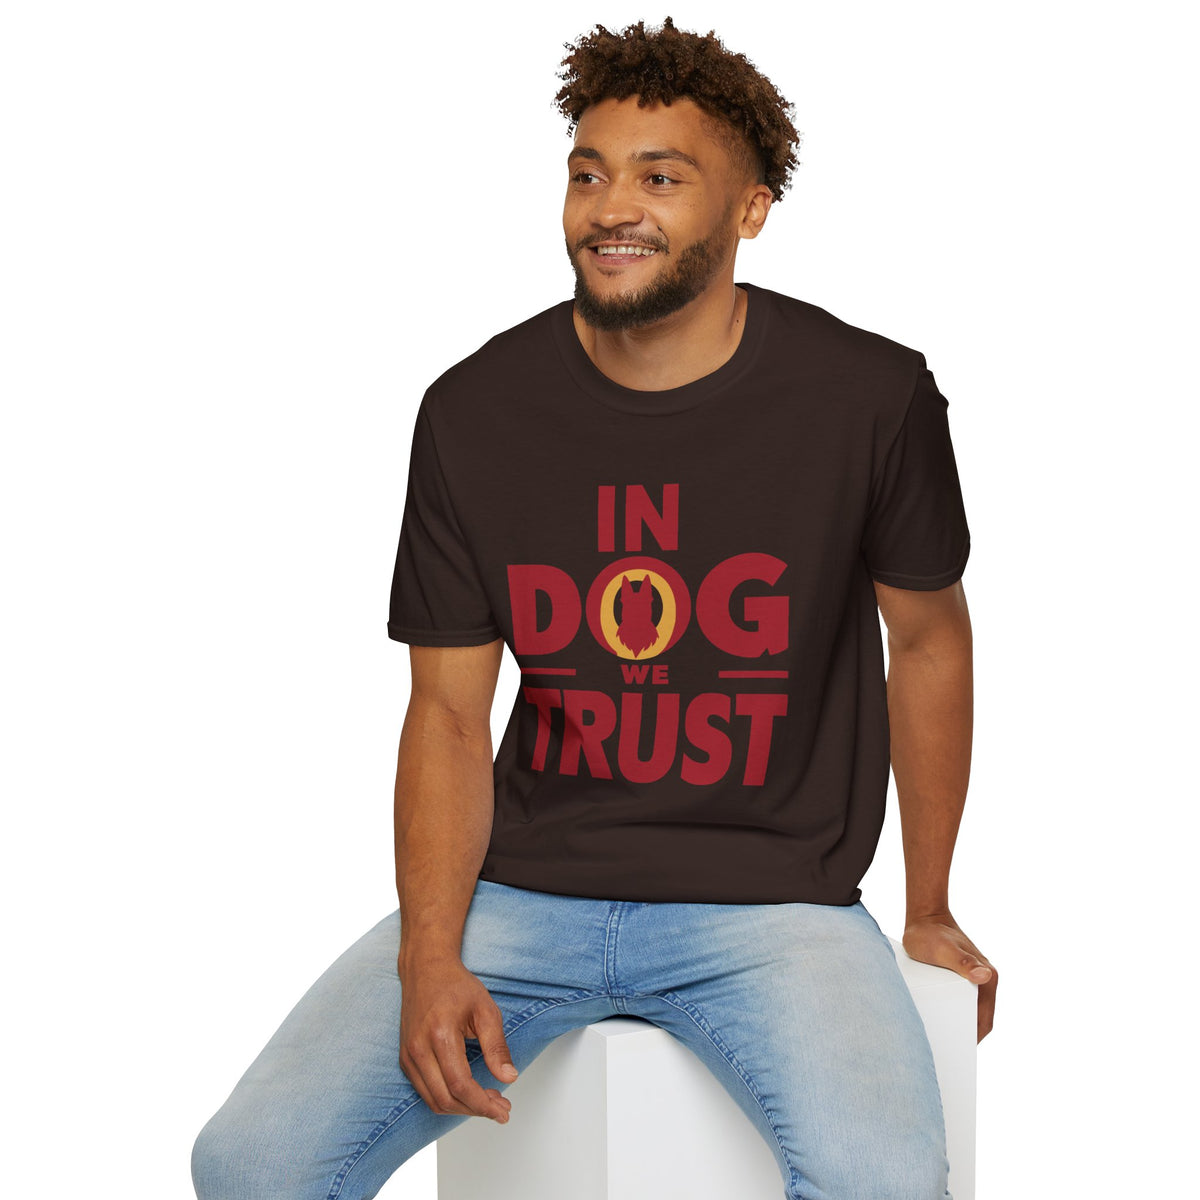 In Dog We trust - German Shepherd T Shirts